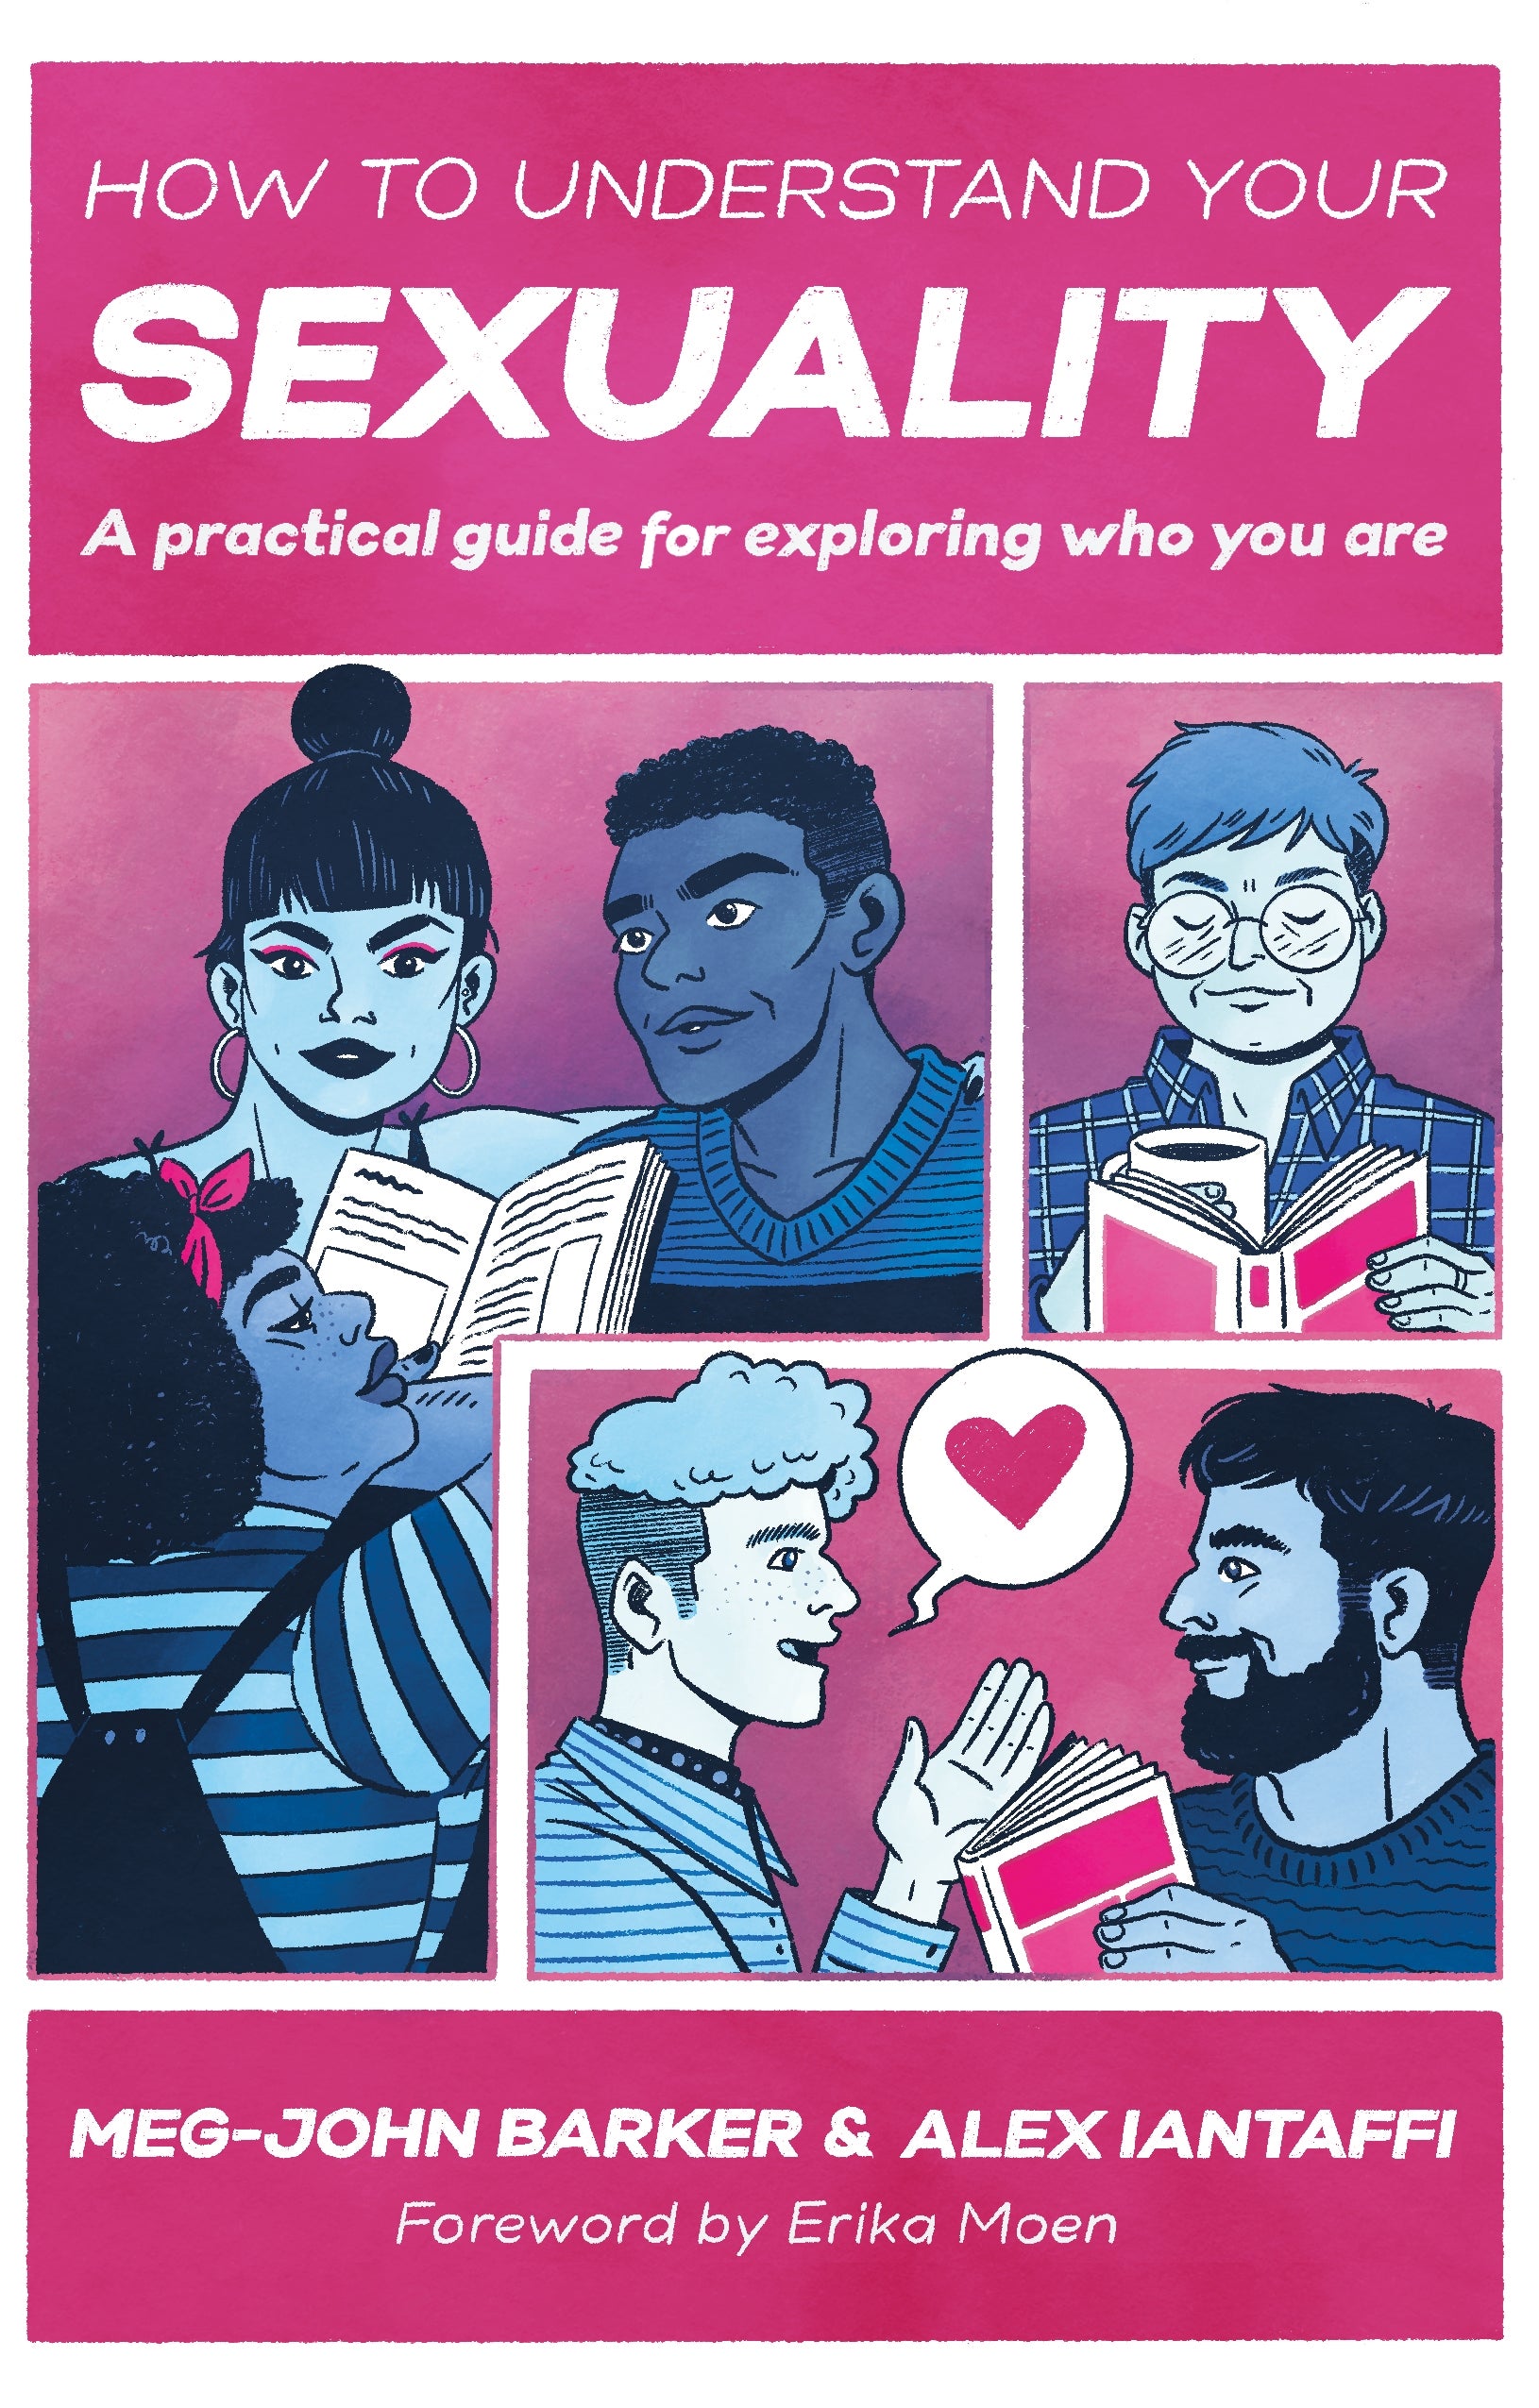 How to Understand Your Sexuality by Meg-John Barker, Alex Iantaffi, Jules Scheele